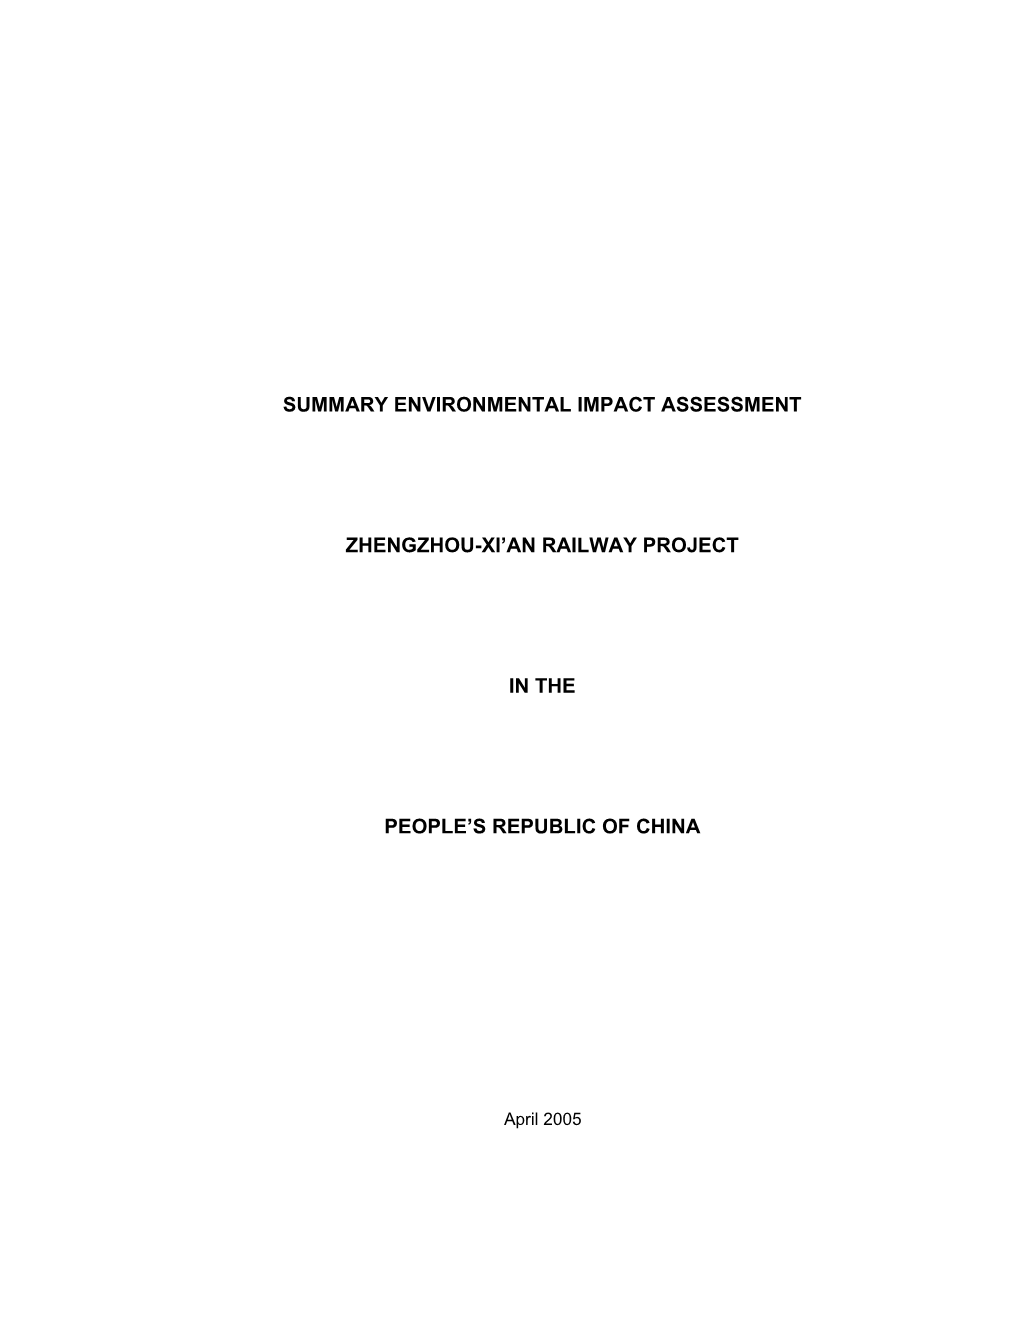 Summary Environmental Impact Assessment Zhengzhou-Xi'an